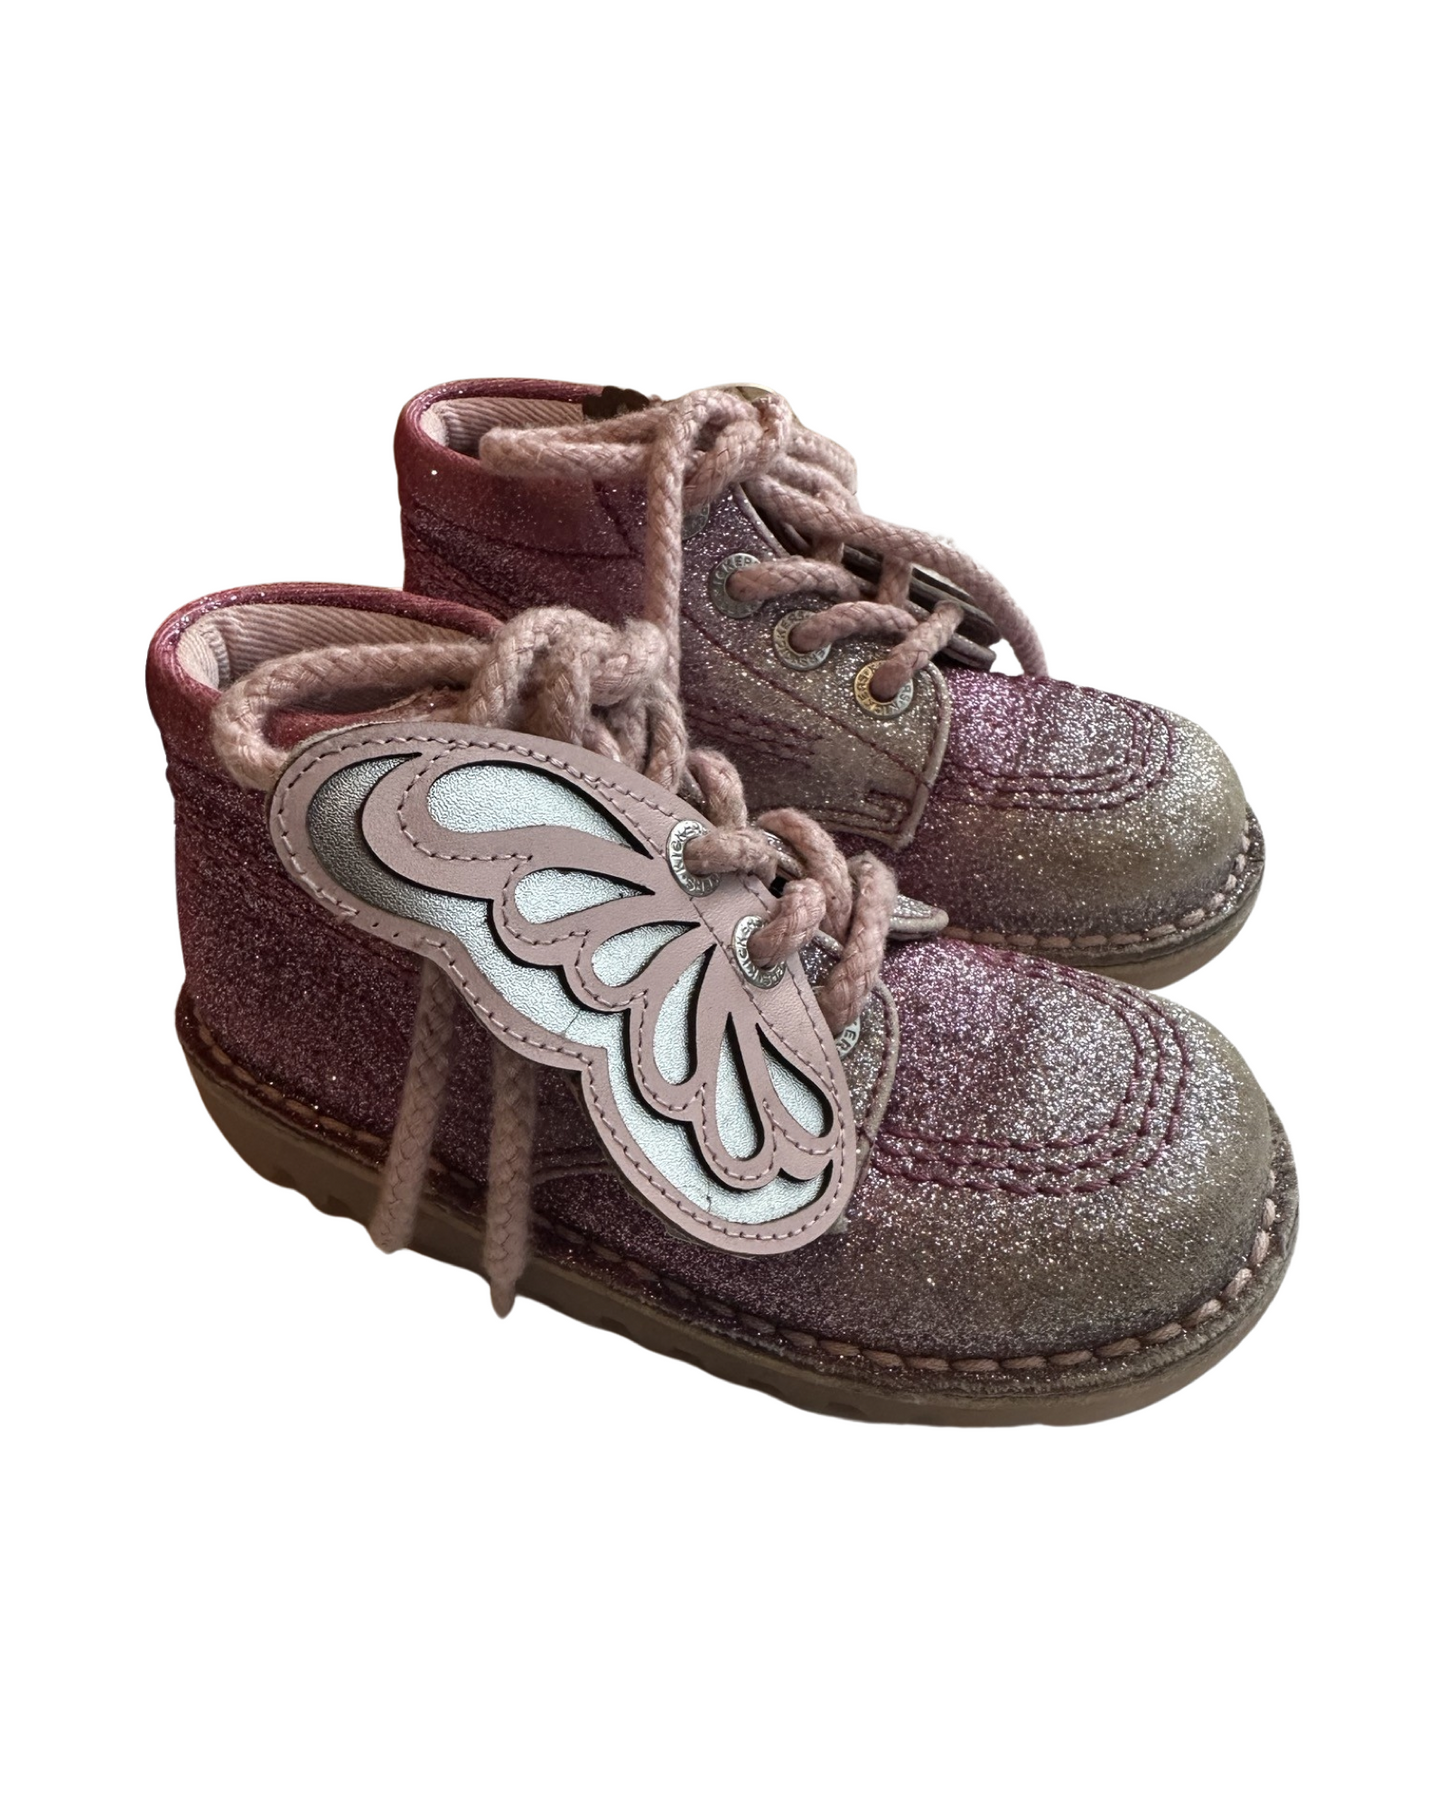 Kickers hi kick faerie boot in pink/silver glitter (UK9/EU27)